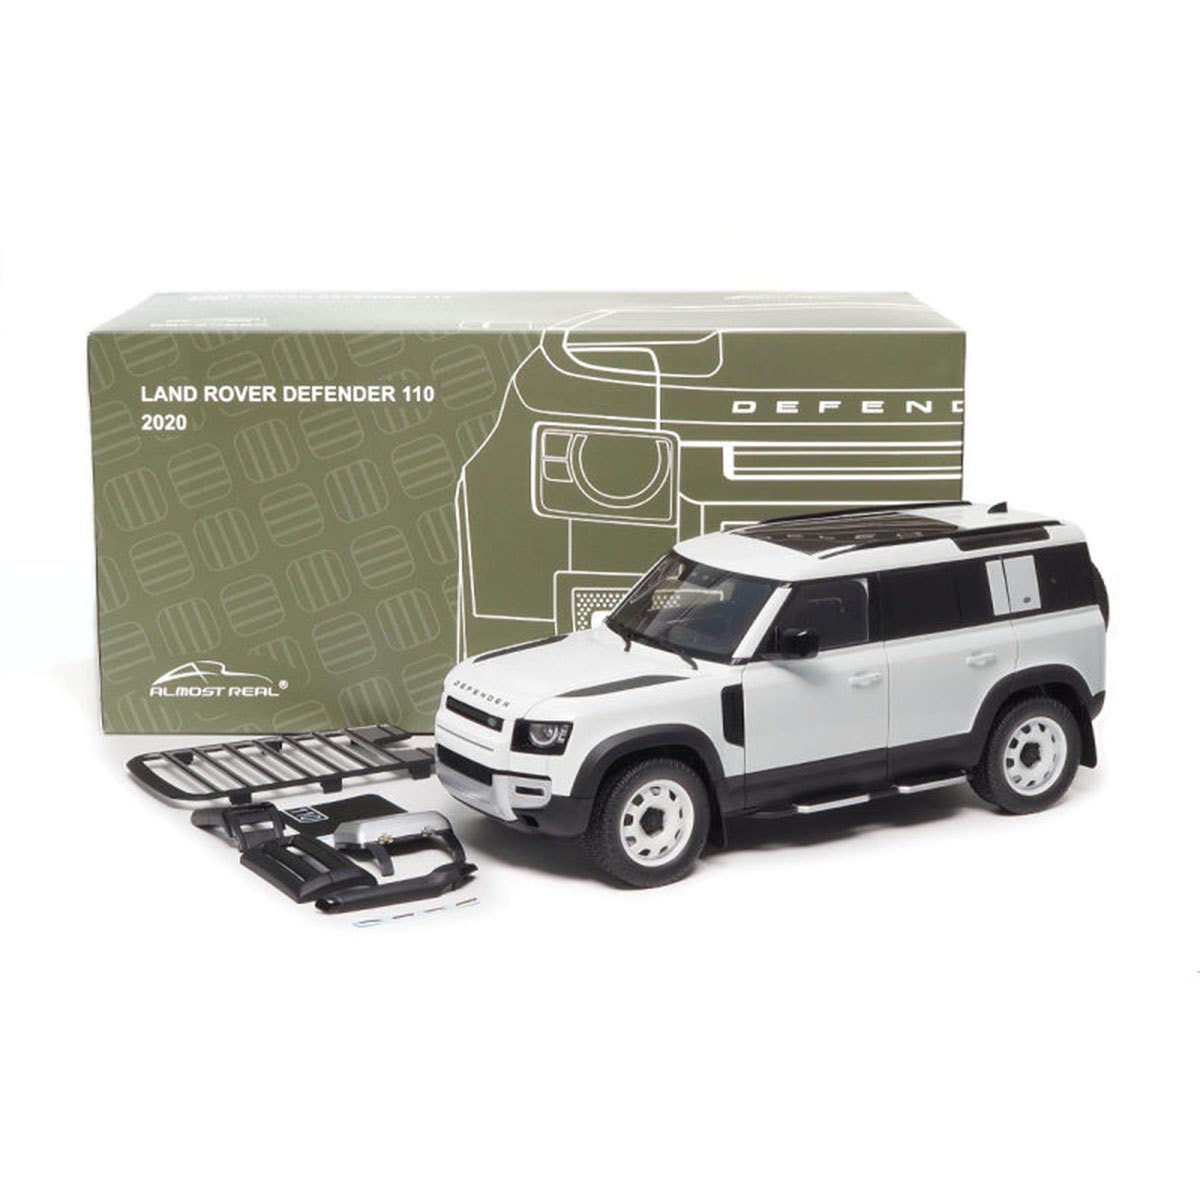 LAND ROVER DEFENDER 110 - 2020 - 30TH ANNIVERSARY EDITION - FUJI WHITE - 1:18 Scale Diecast Model Car